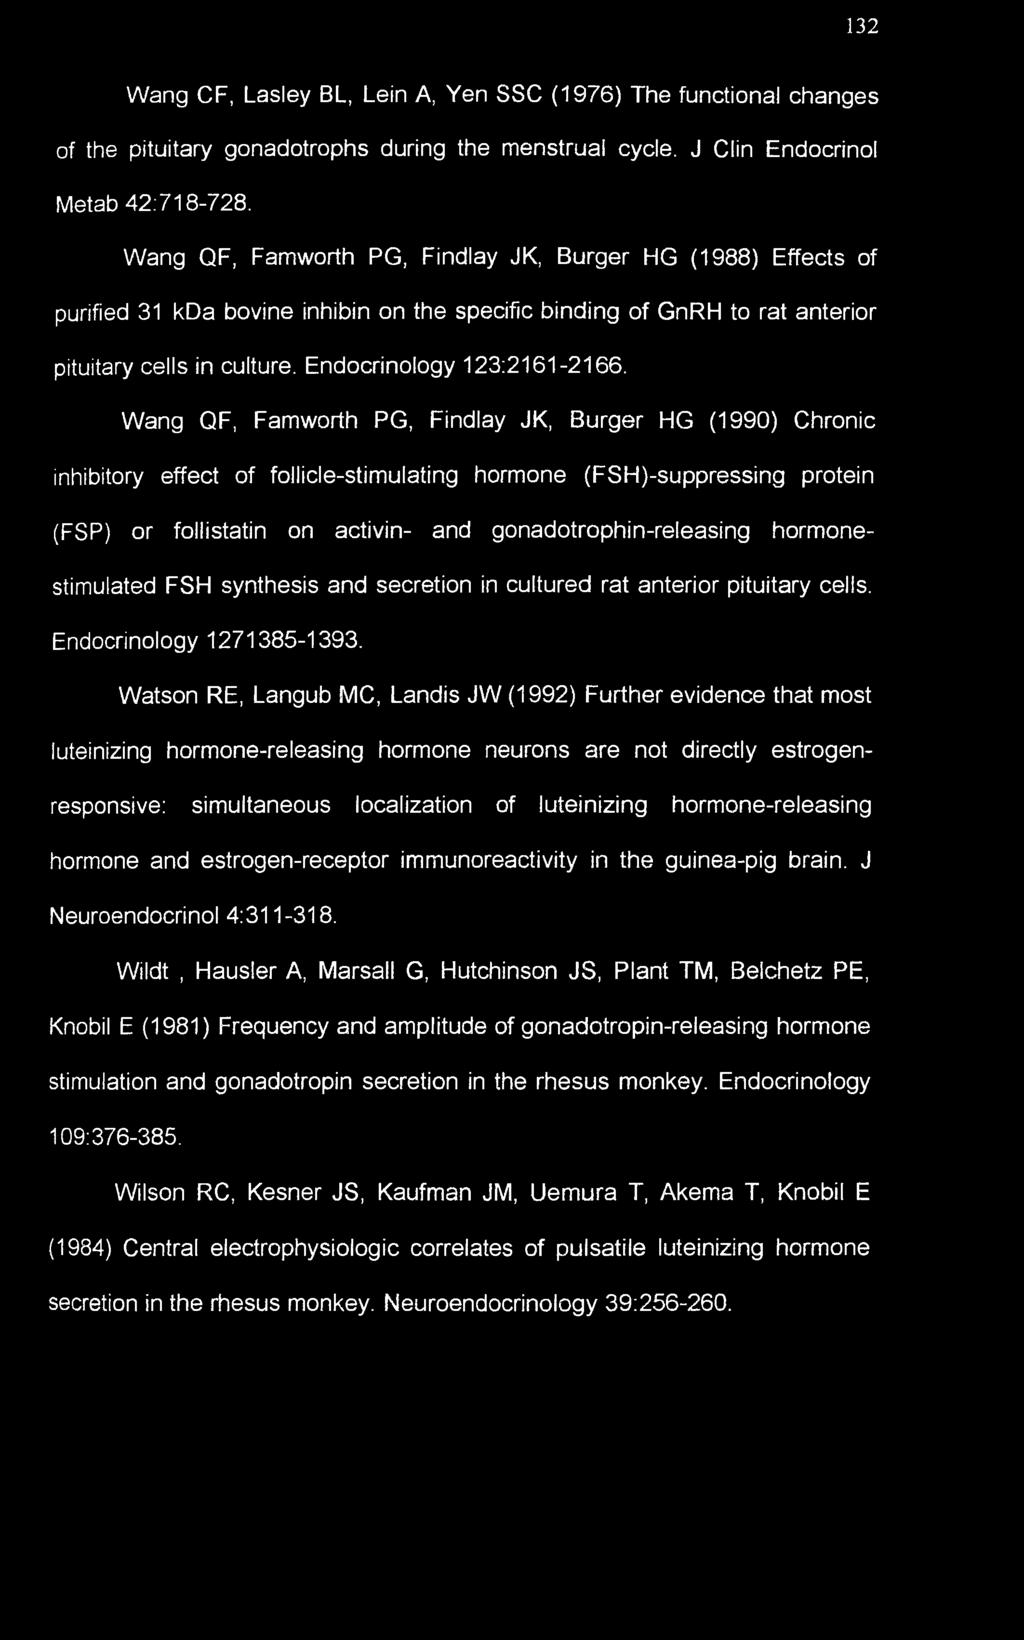 Wang QF, Famworth PG, Findlay JK, Burger FIG (1990) Chronic inhibitory effect of follicle-stimulating hormone (FSFI)-suppressing protein (FSP) or follistatin on activin- and gonadotrophin-releasing